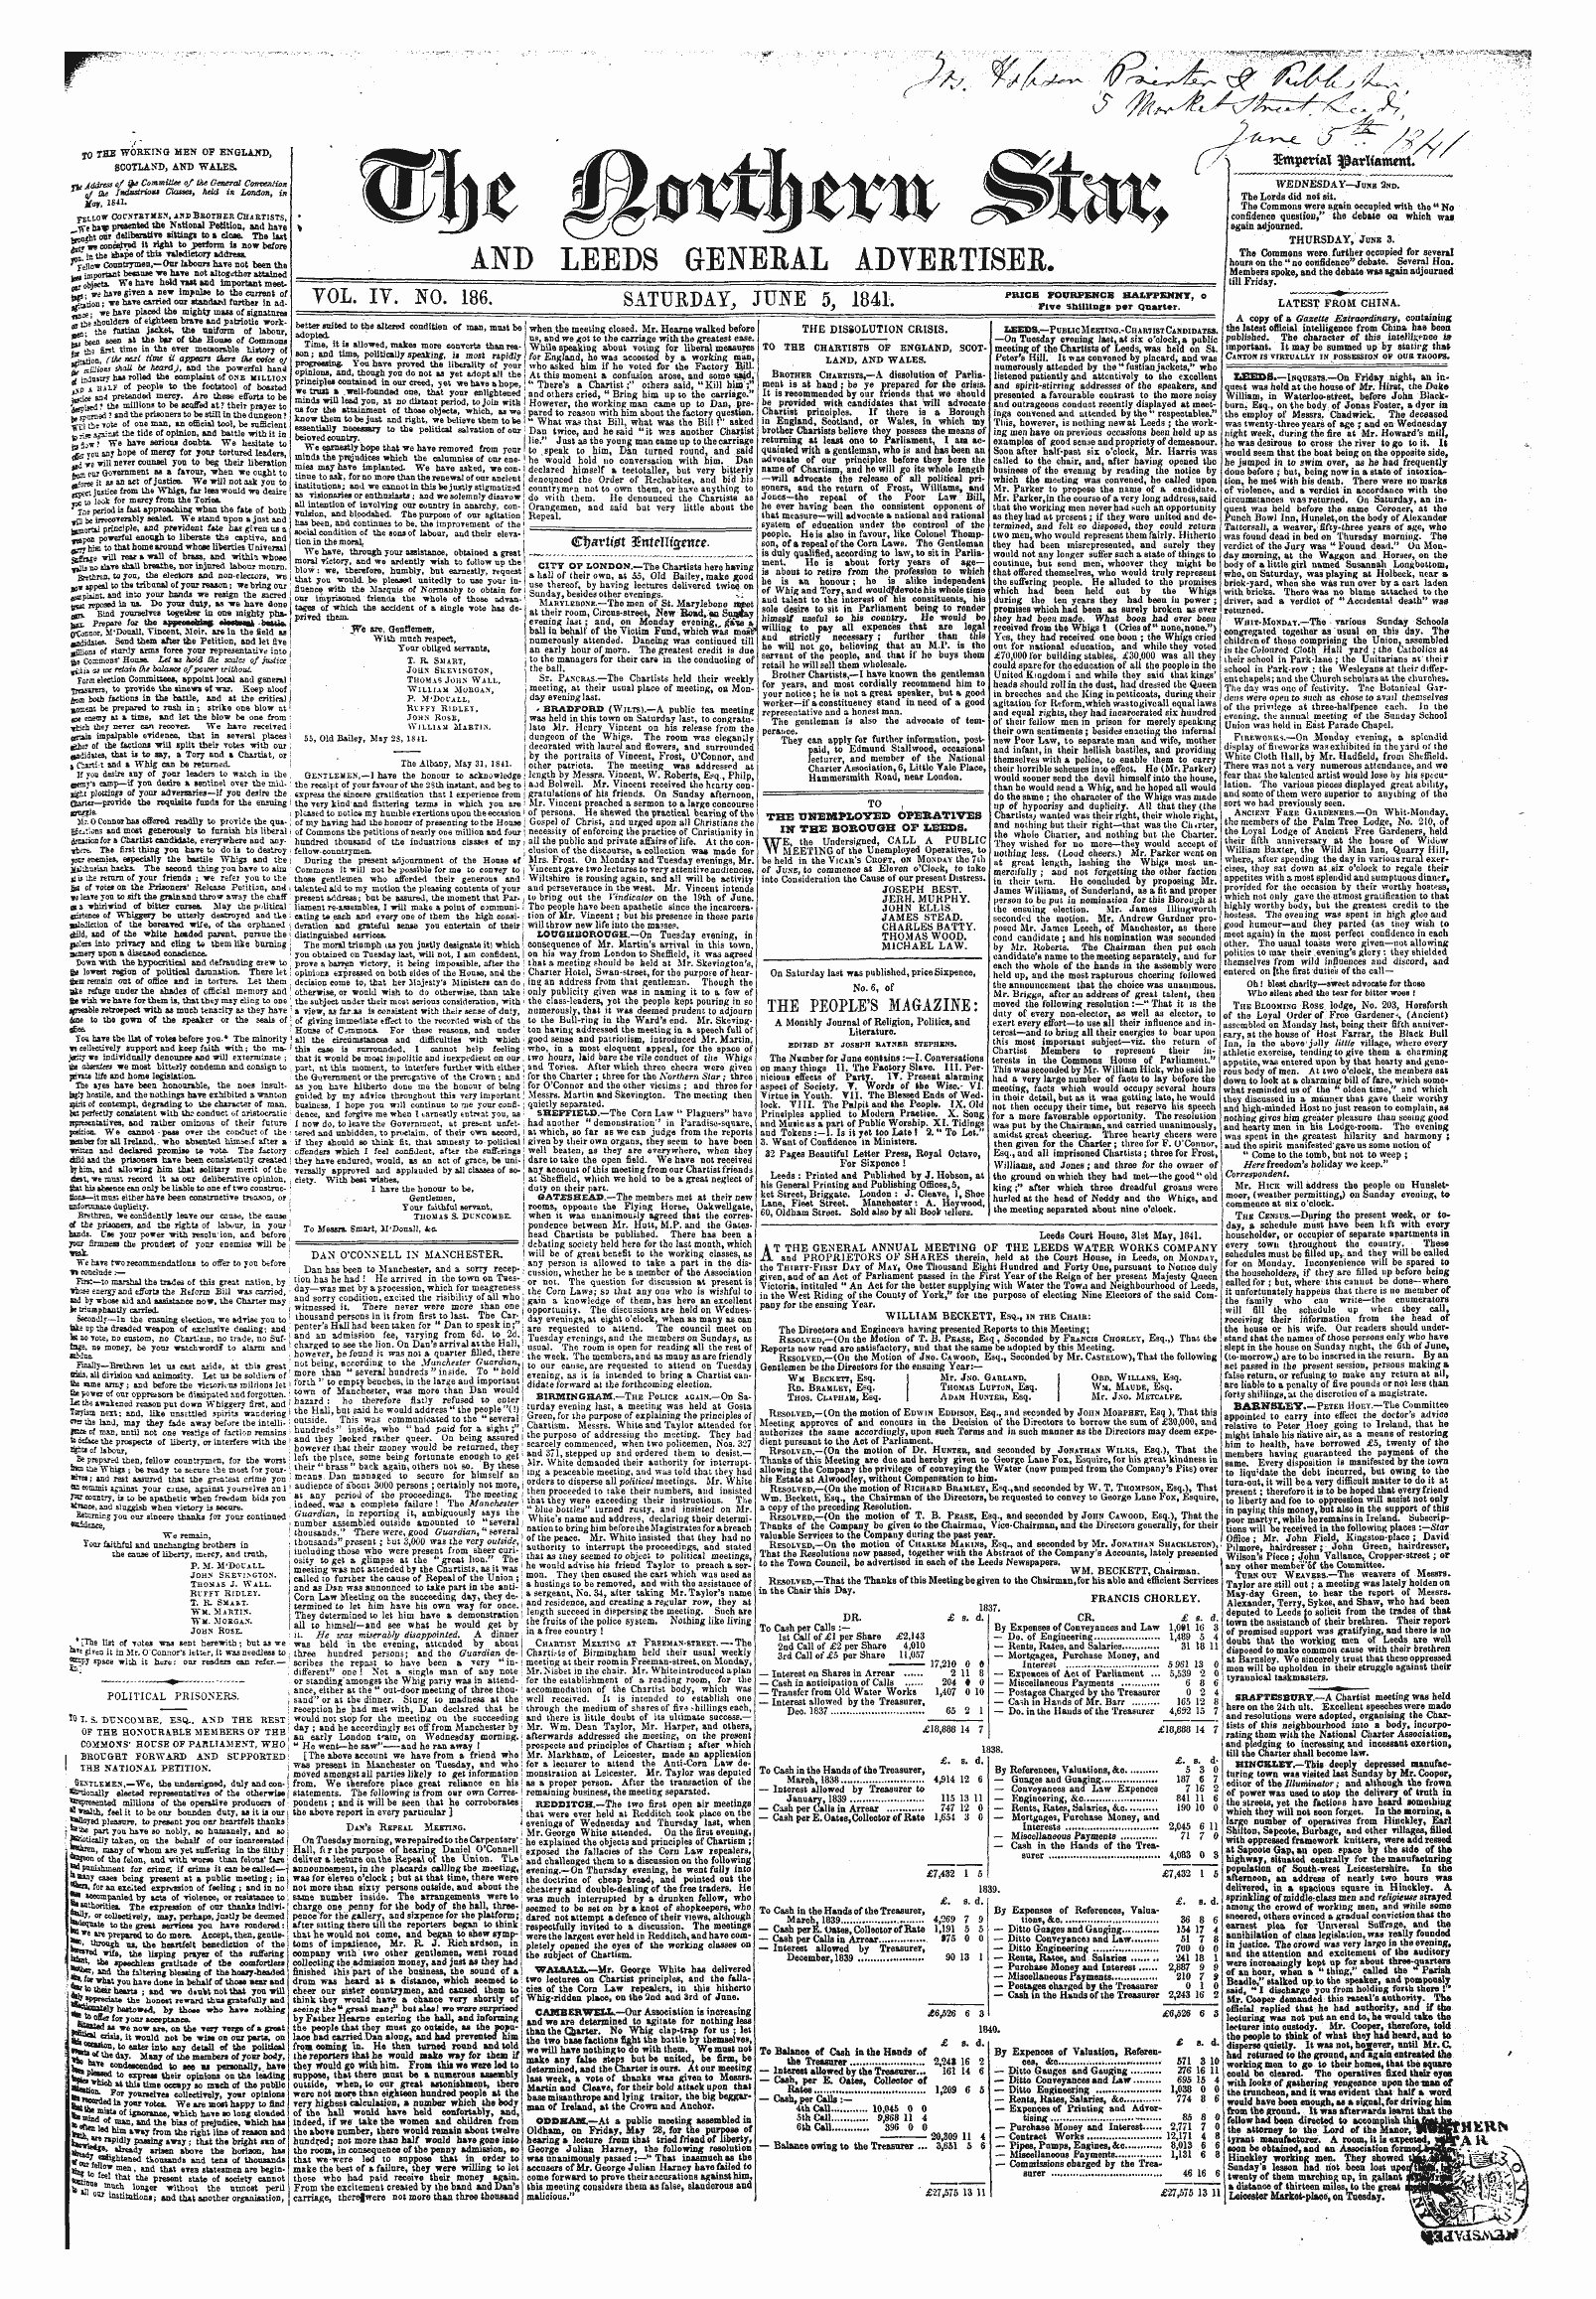 Northern Star (1837-1852): jS F Y, 4th edition - Untitled Ad